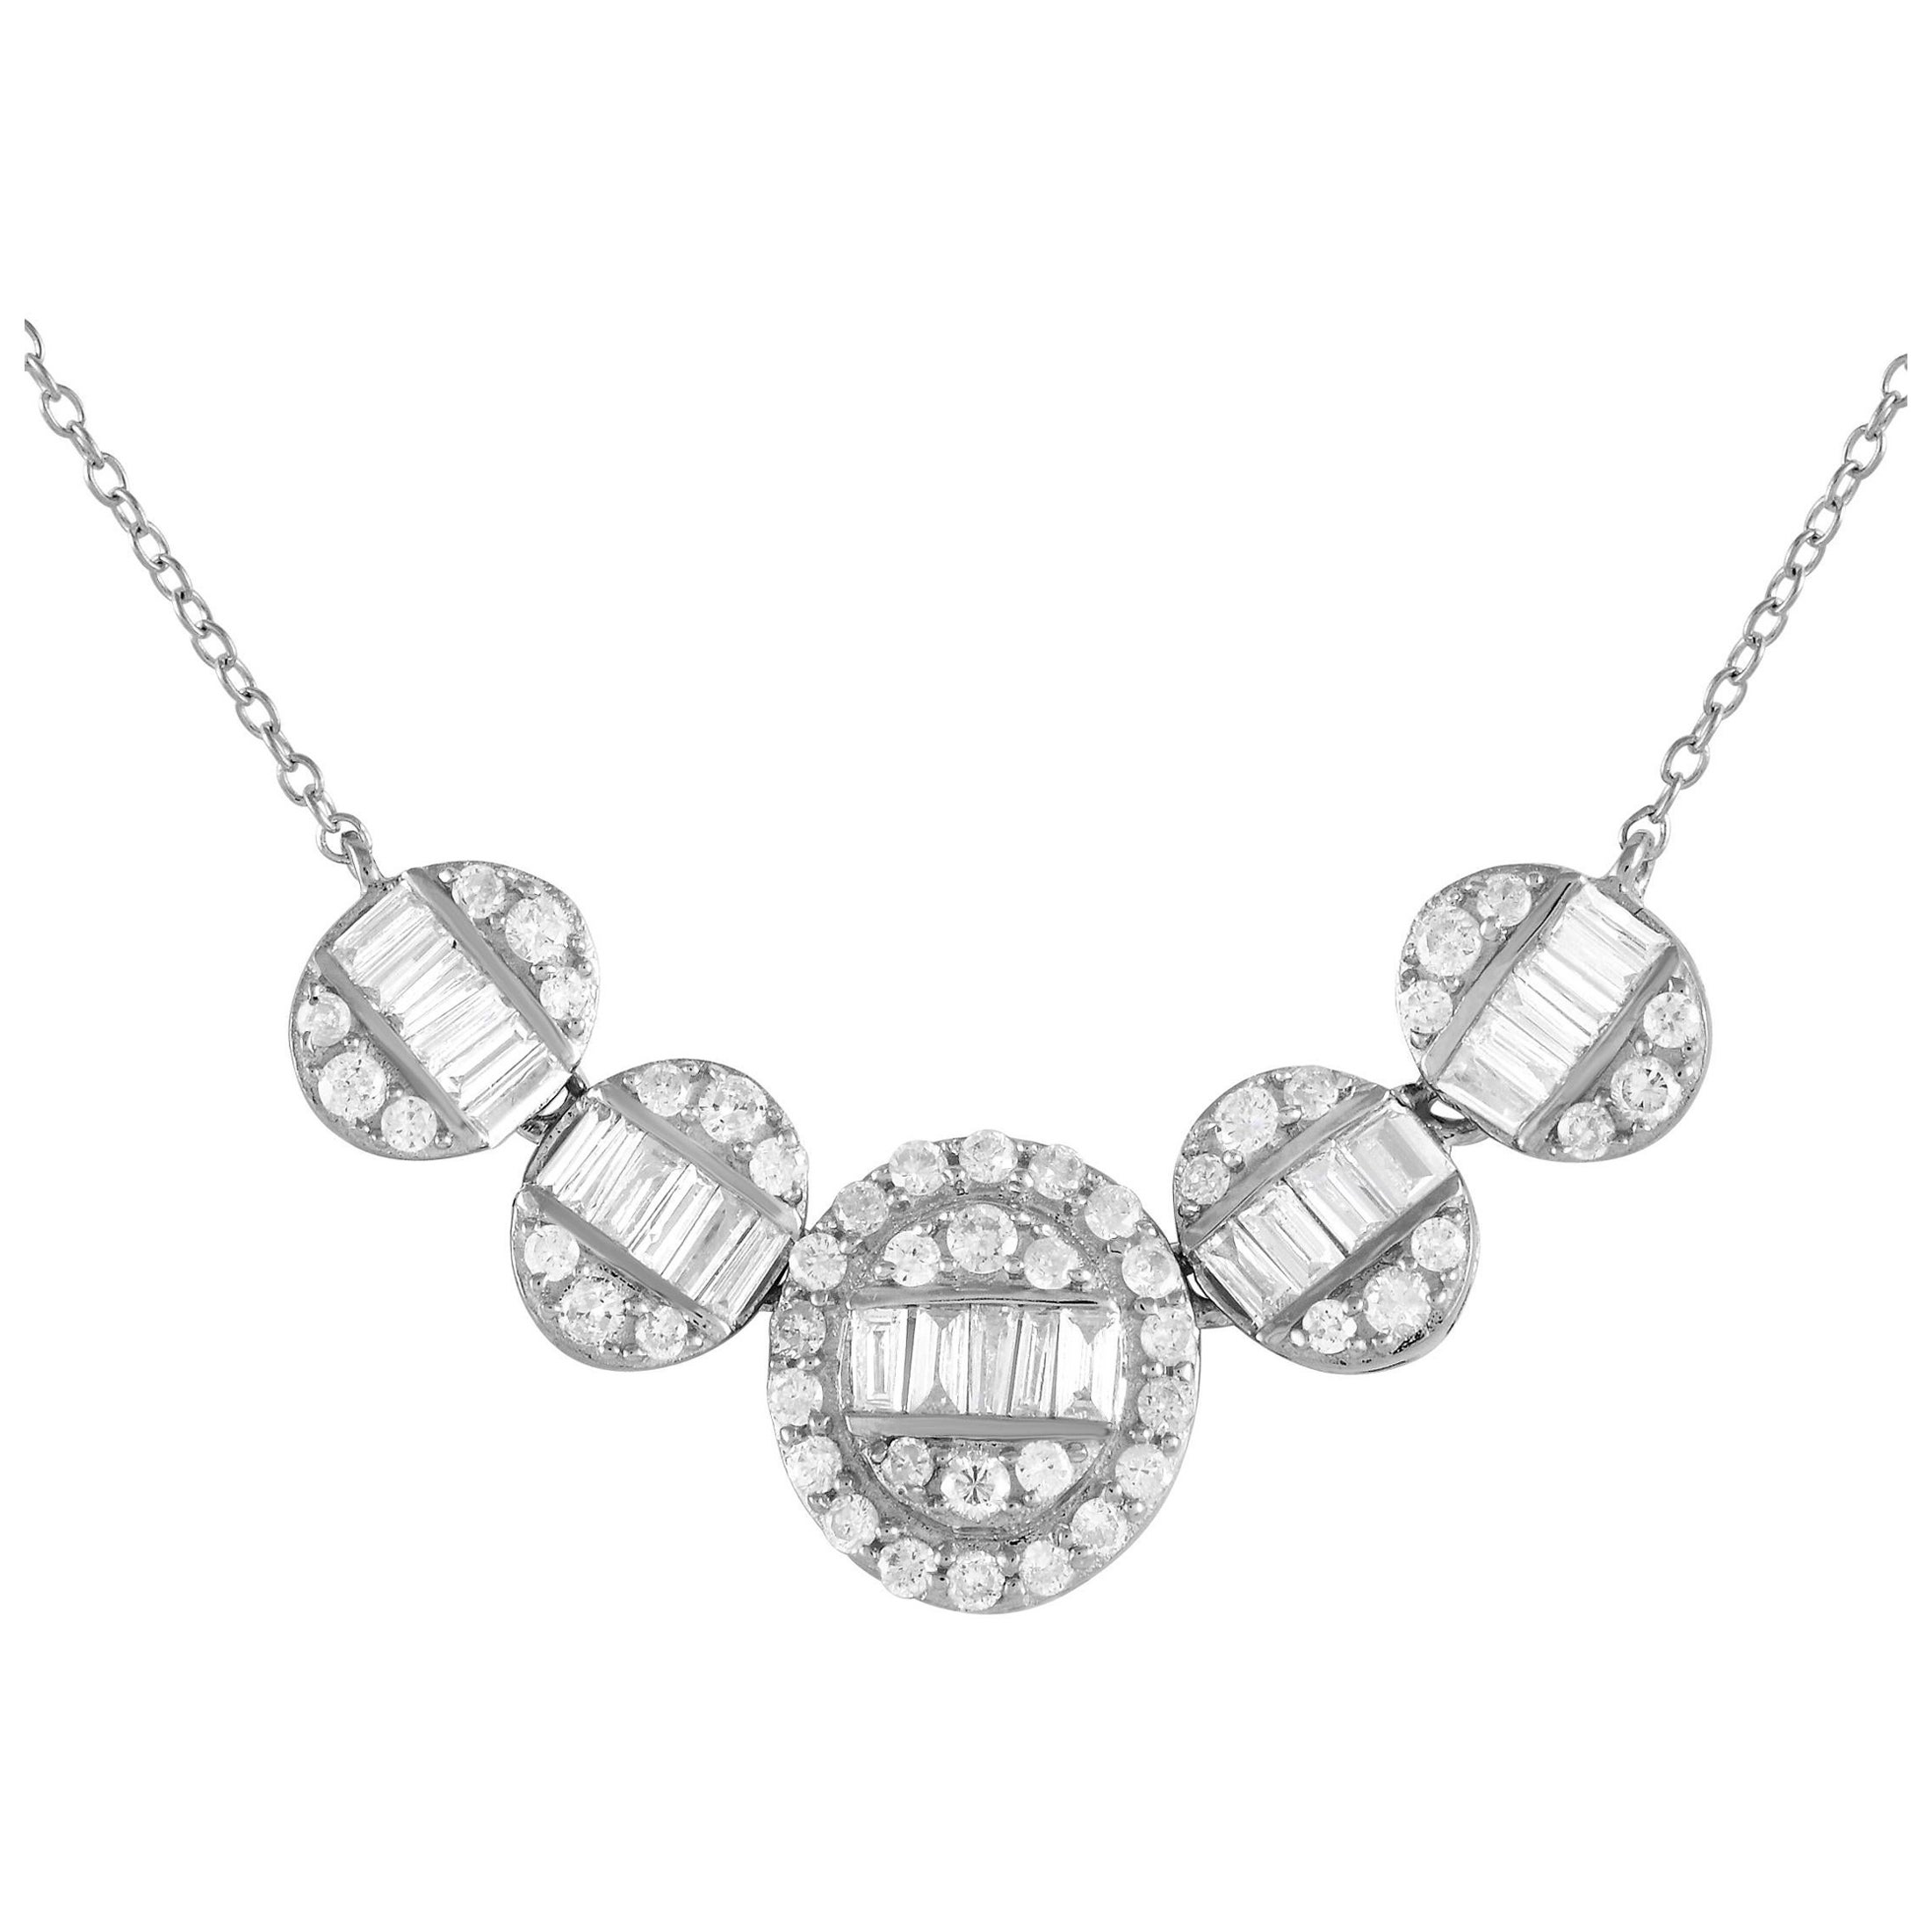 LB Exclusive 14K White Gold 0.60ct Diamond Necklace PN14836 For Sale